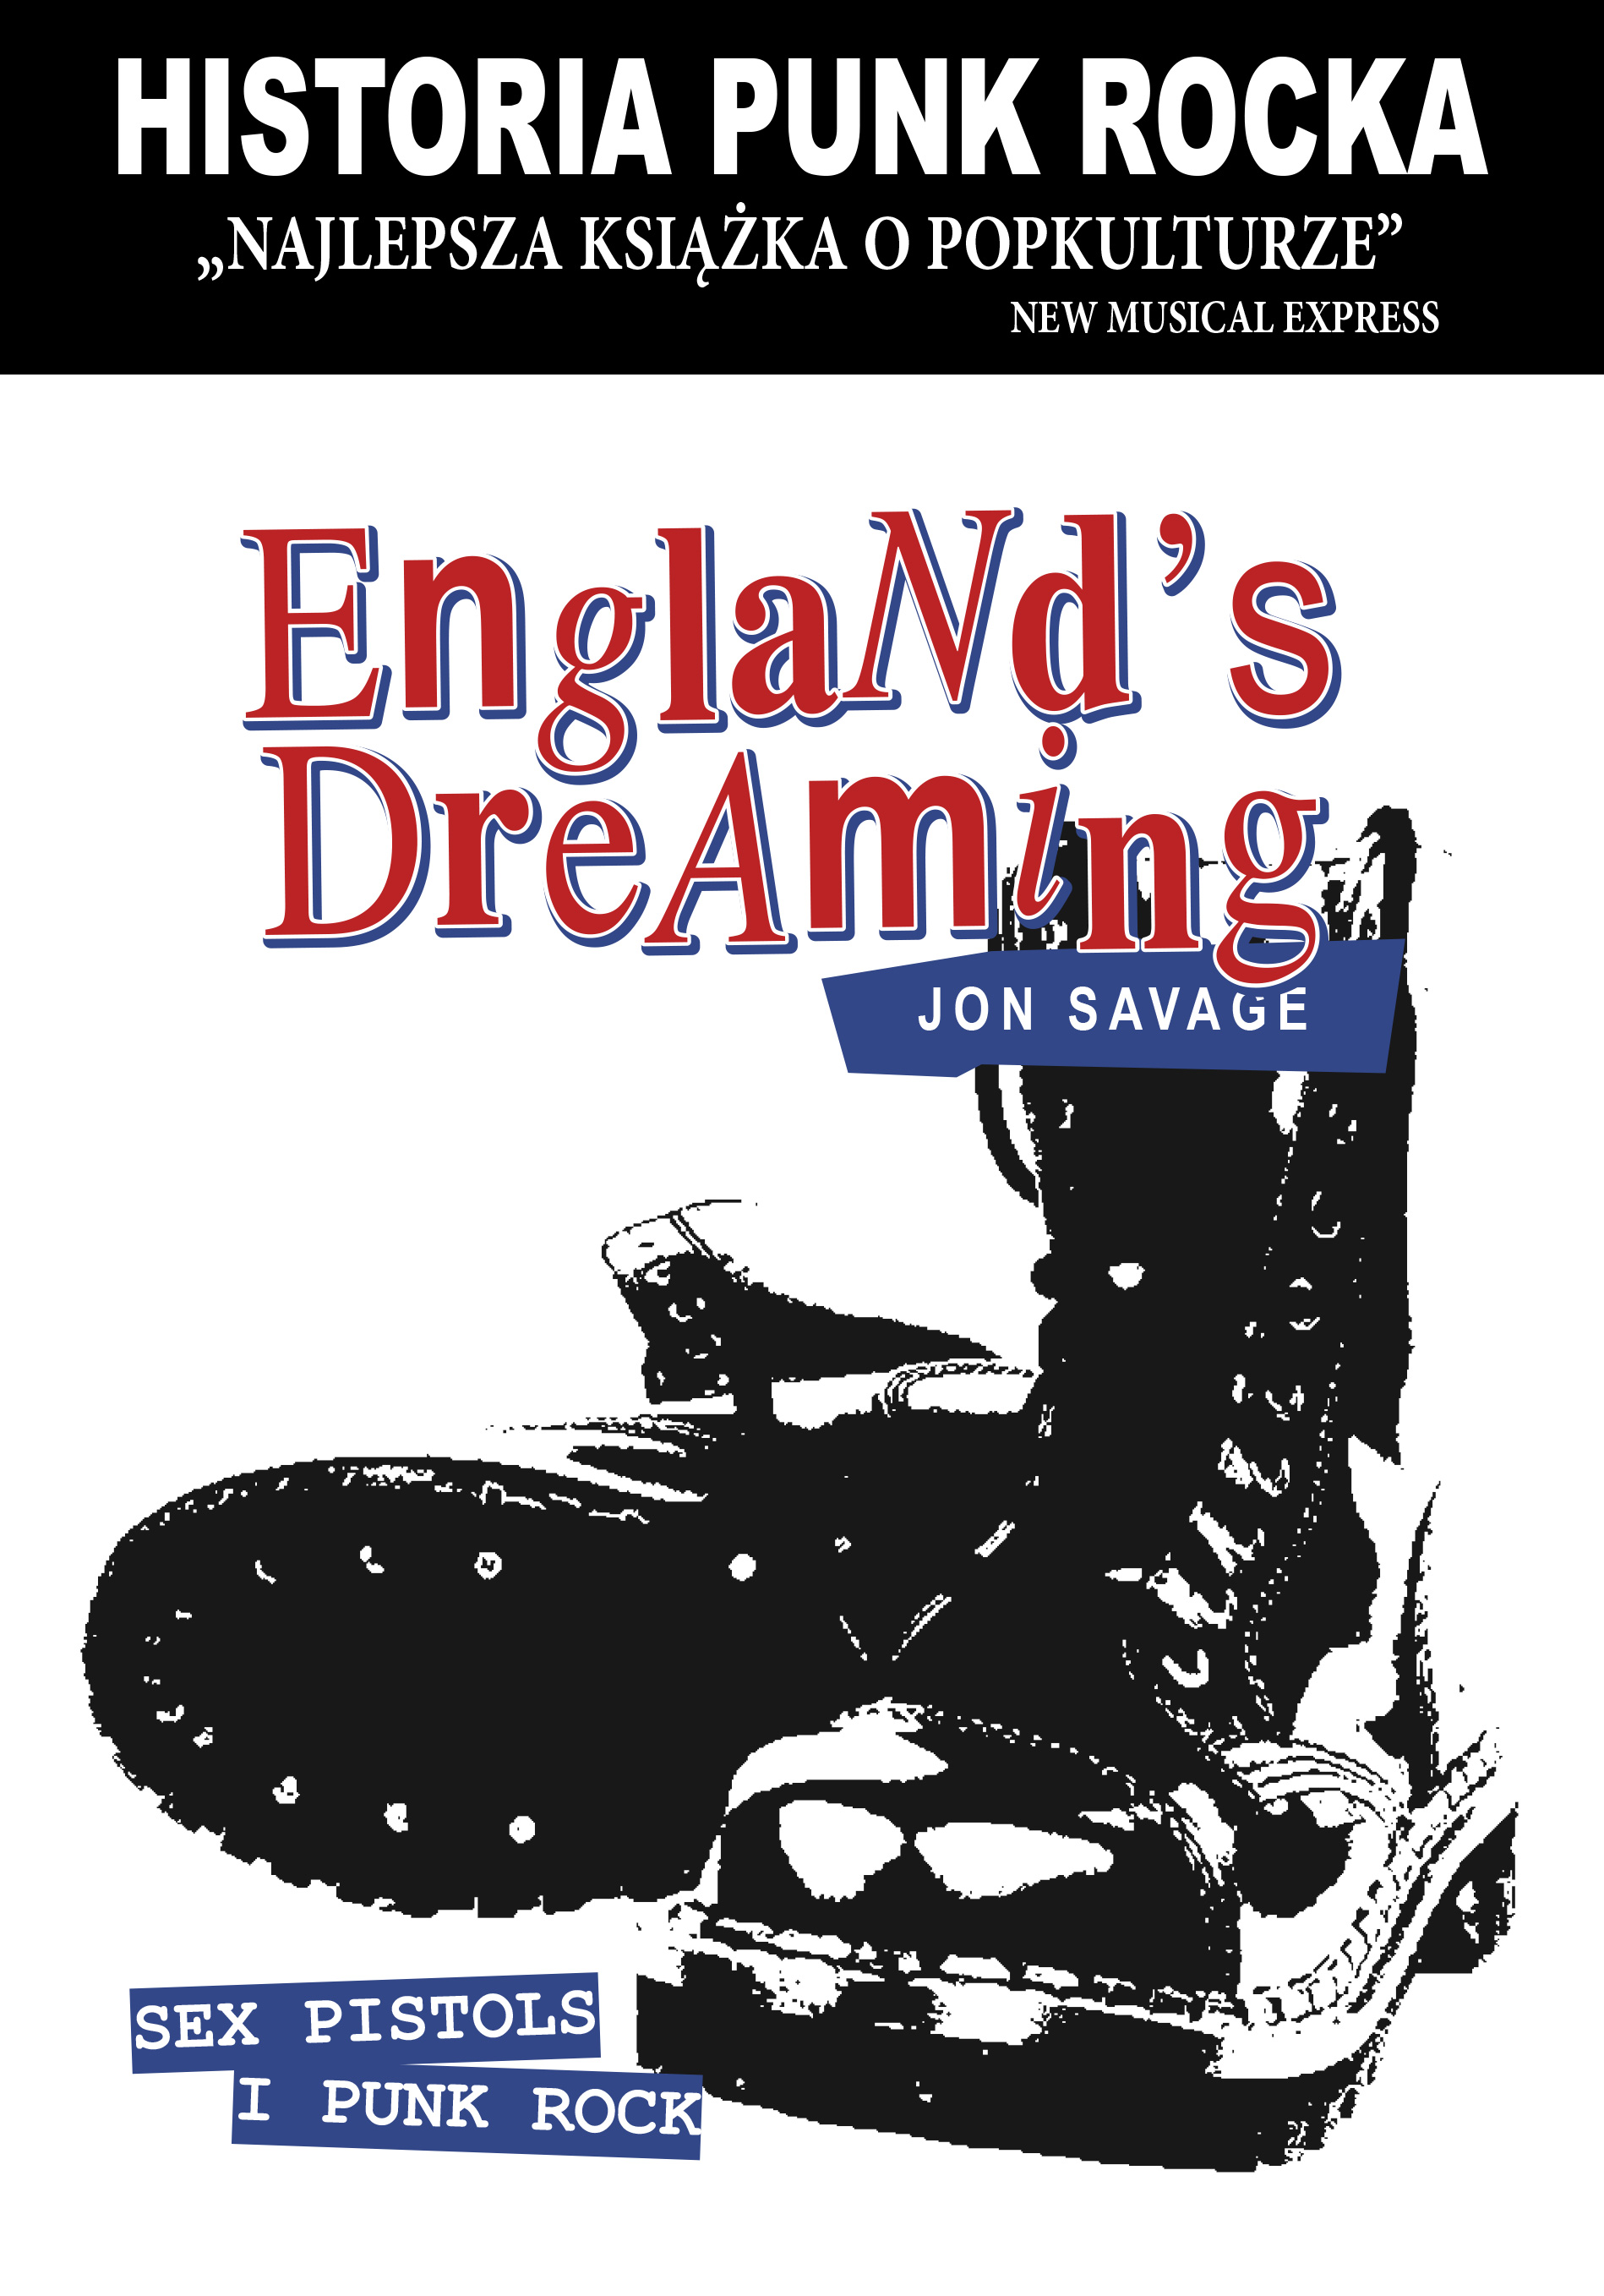 Jon Savage-Englands Dreaming. Historia Punk Rocka